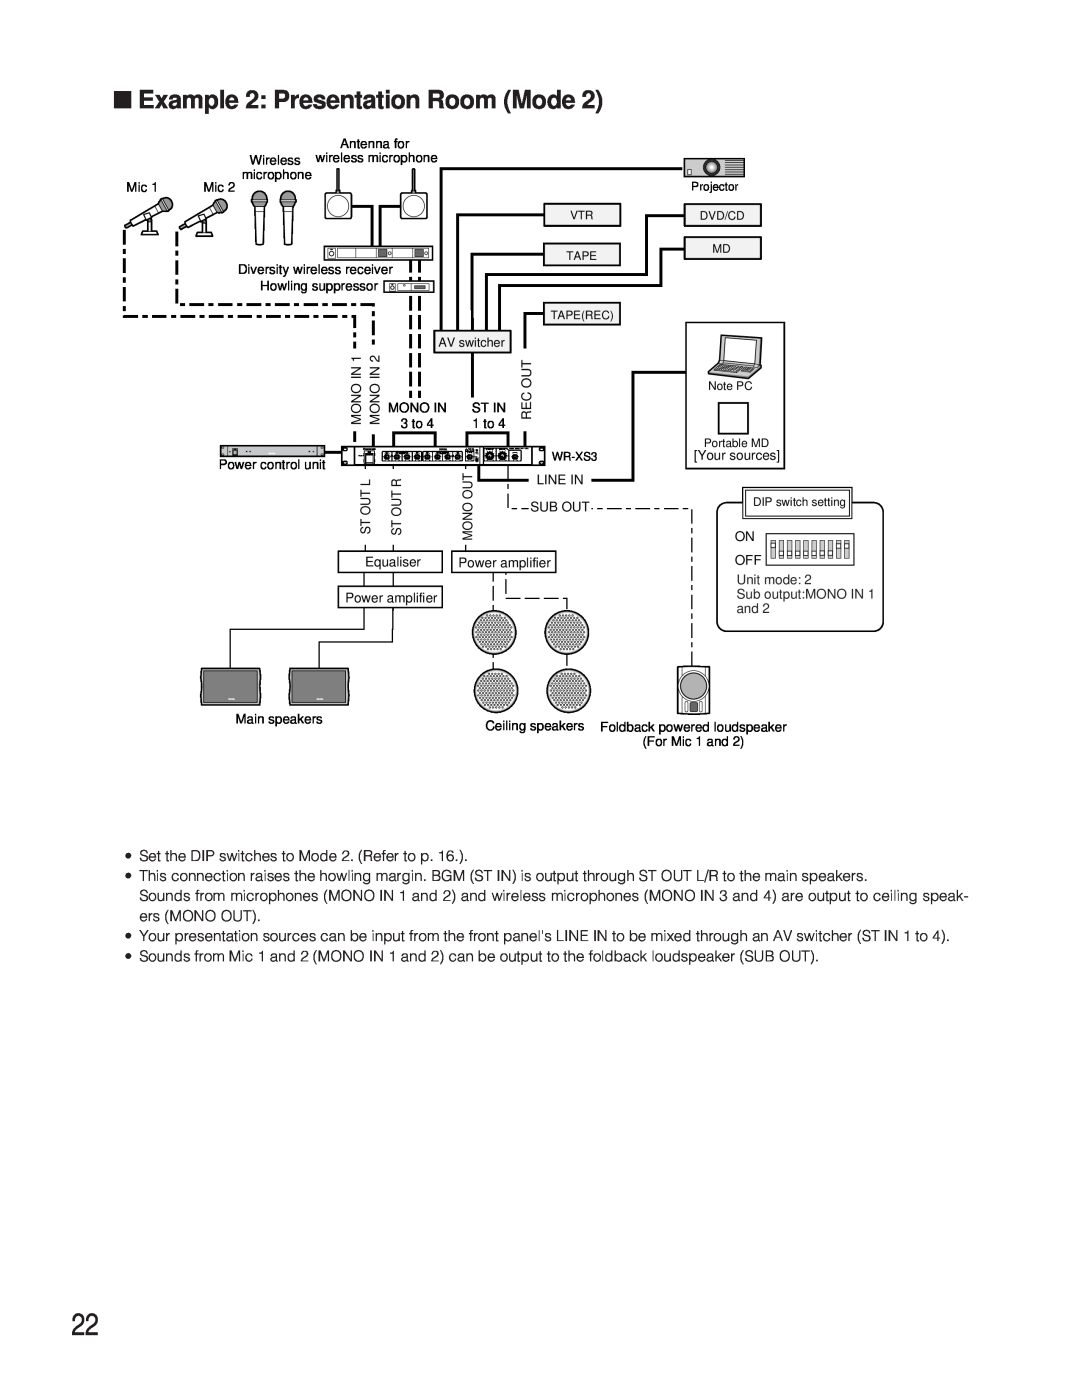 Panasonic WR-XS3P operating instructions Example 2 Presentation Room Mode 